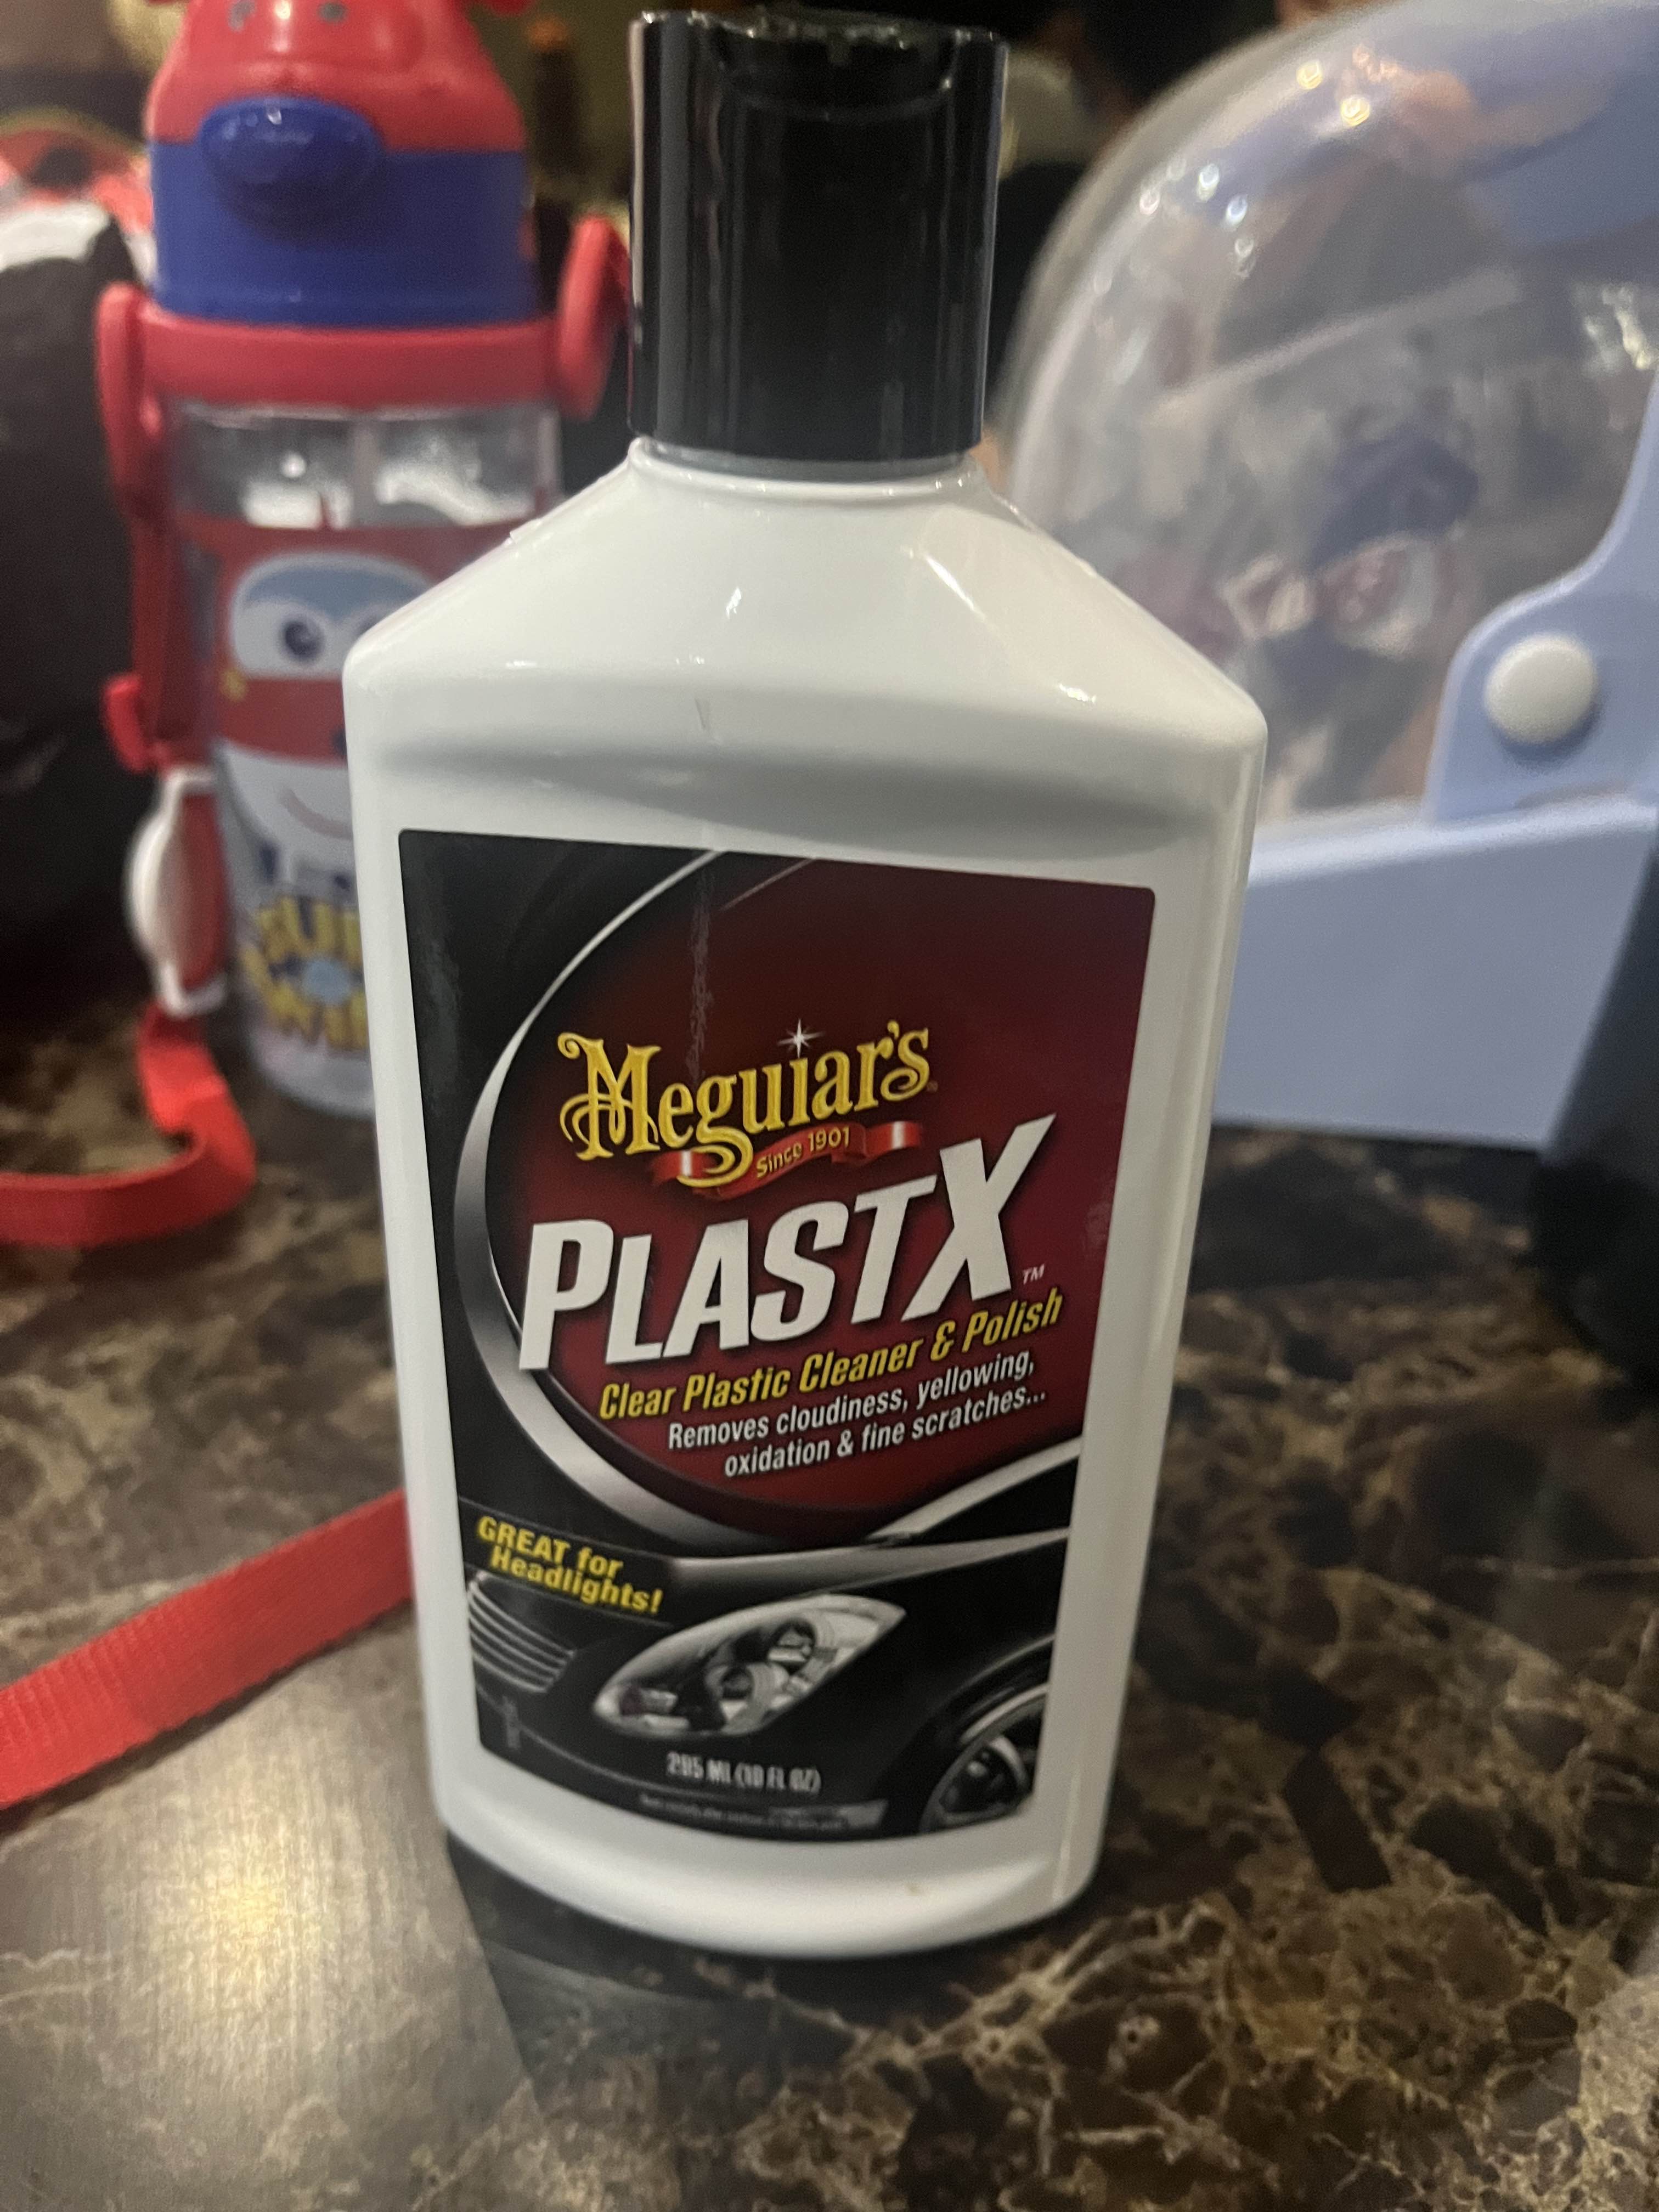 Meguiars PlastX Clear Plastic Cleaner & Polish